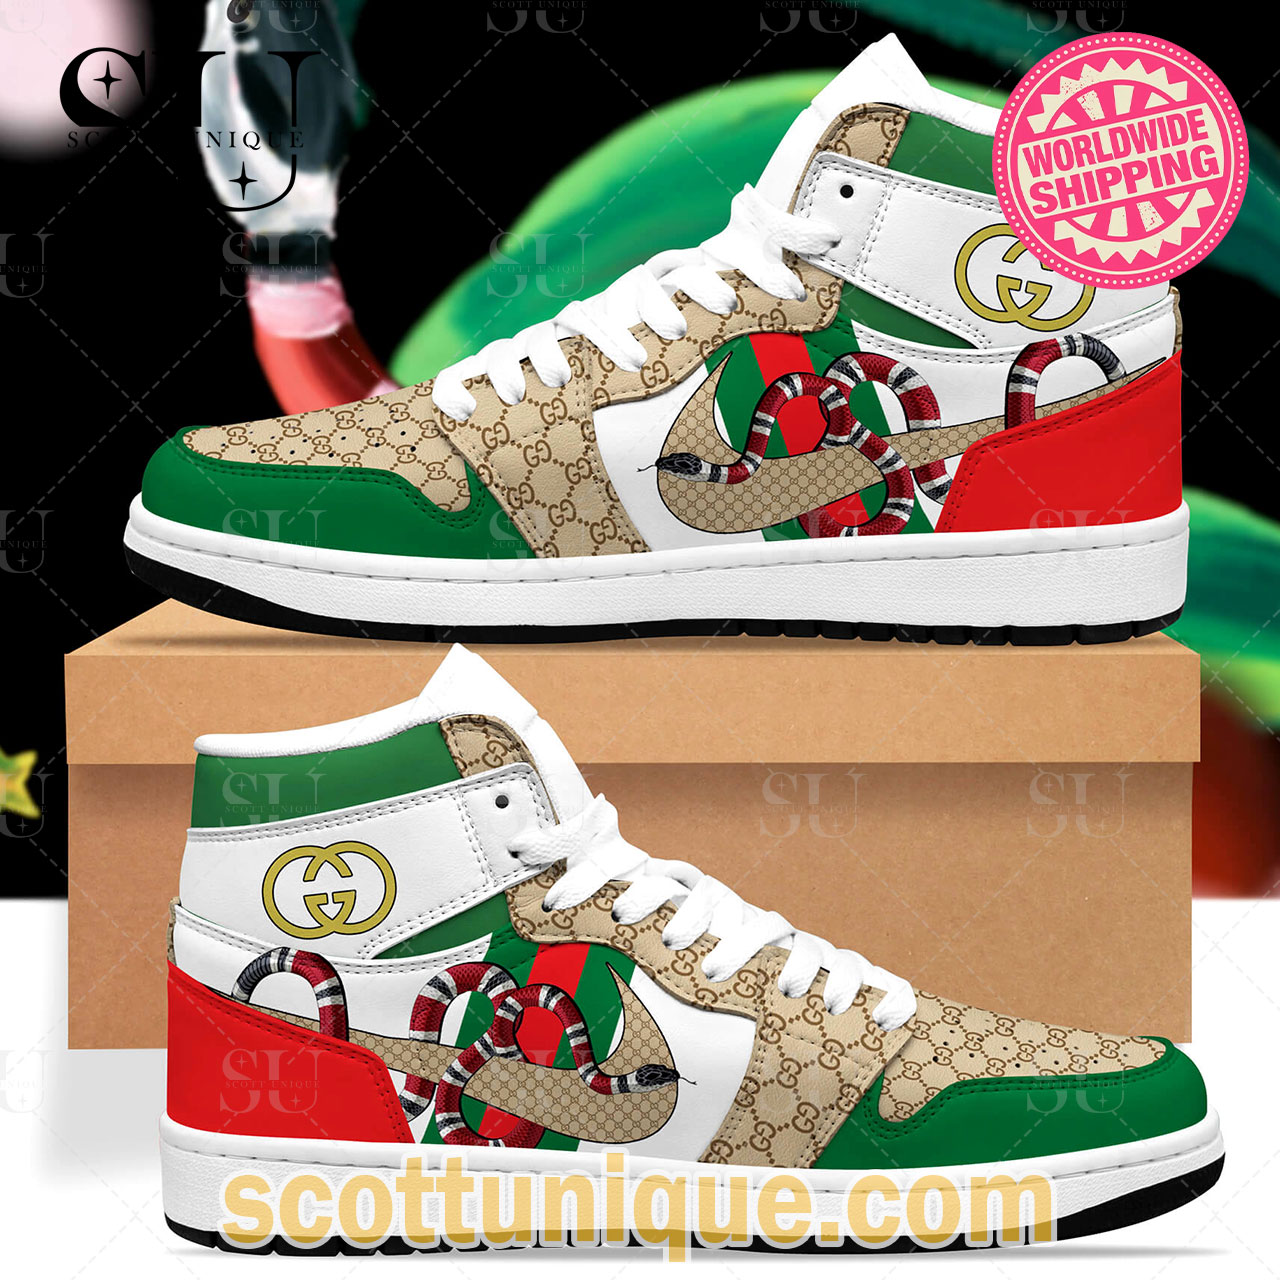 Gucci x Nike Kingsnake Premium Jordan High Top Shoes